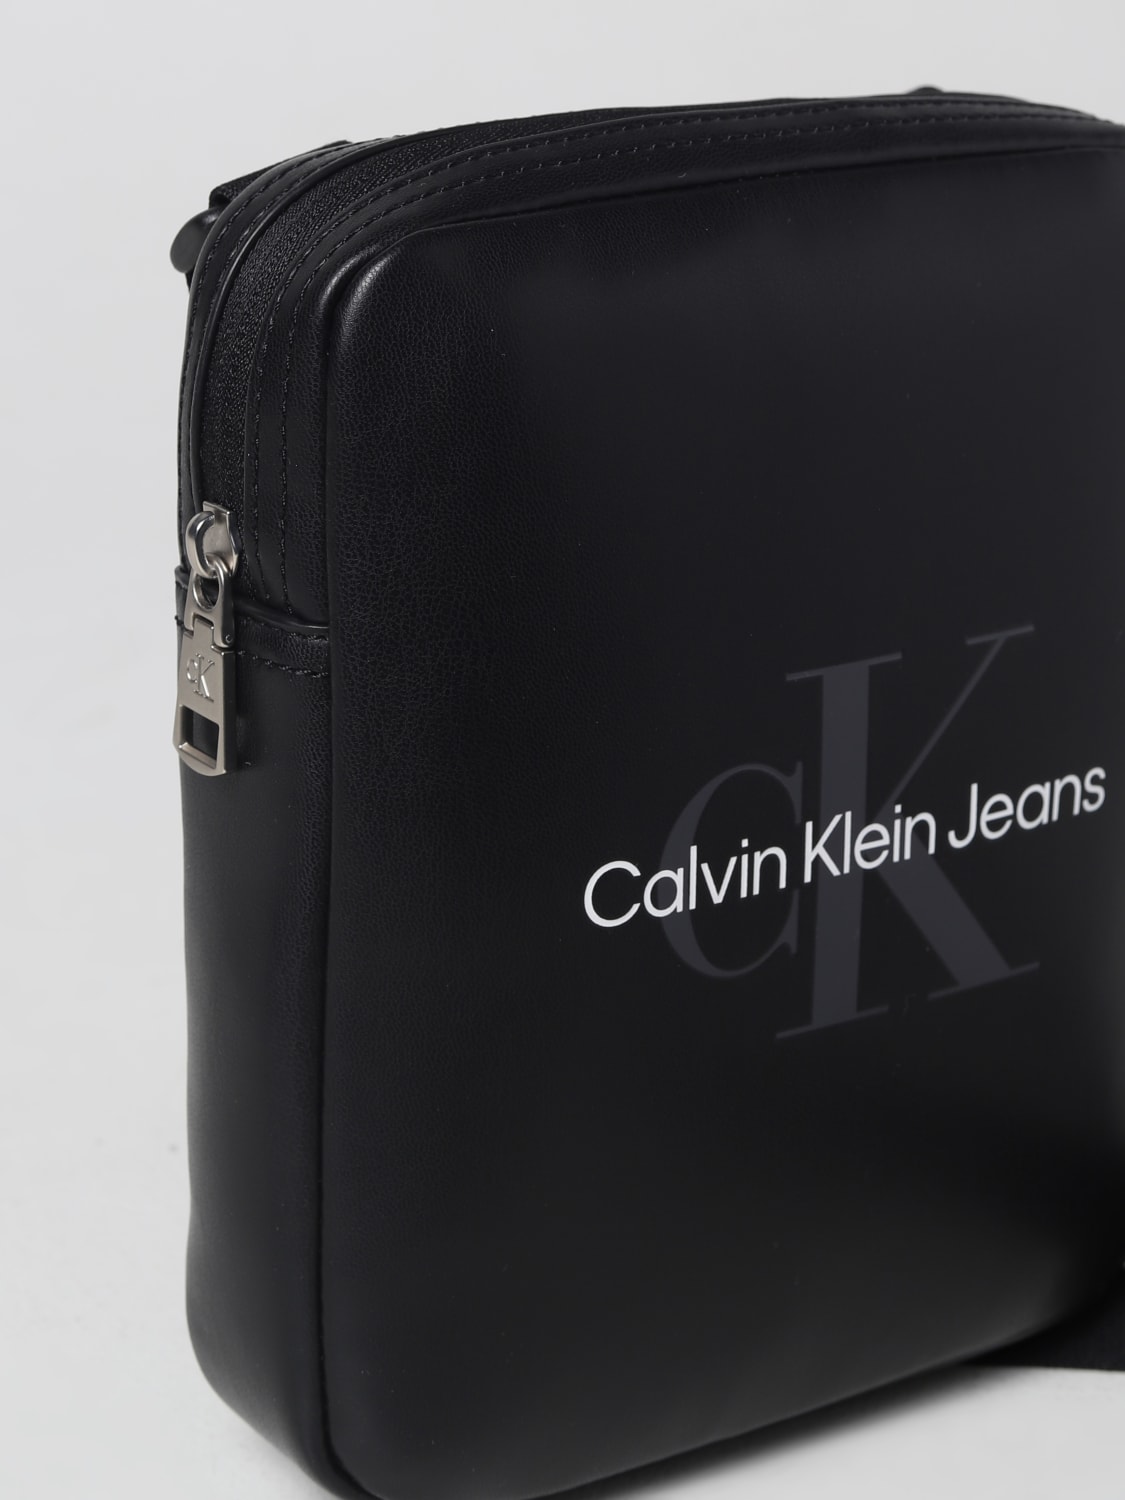 Calvin Klein Jeans monogram logo cross body bag in white